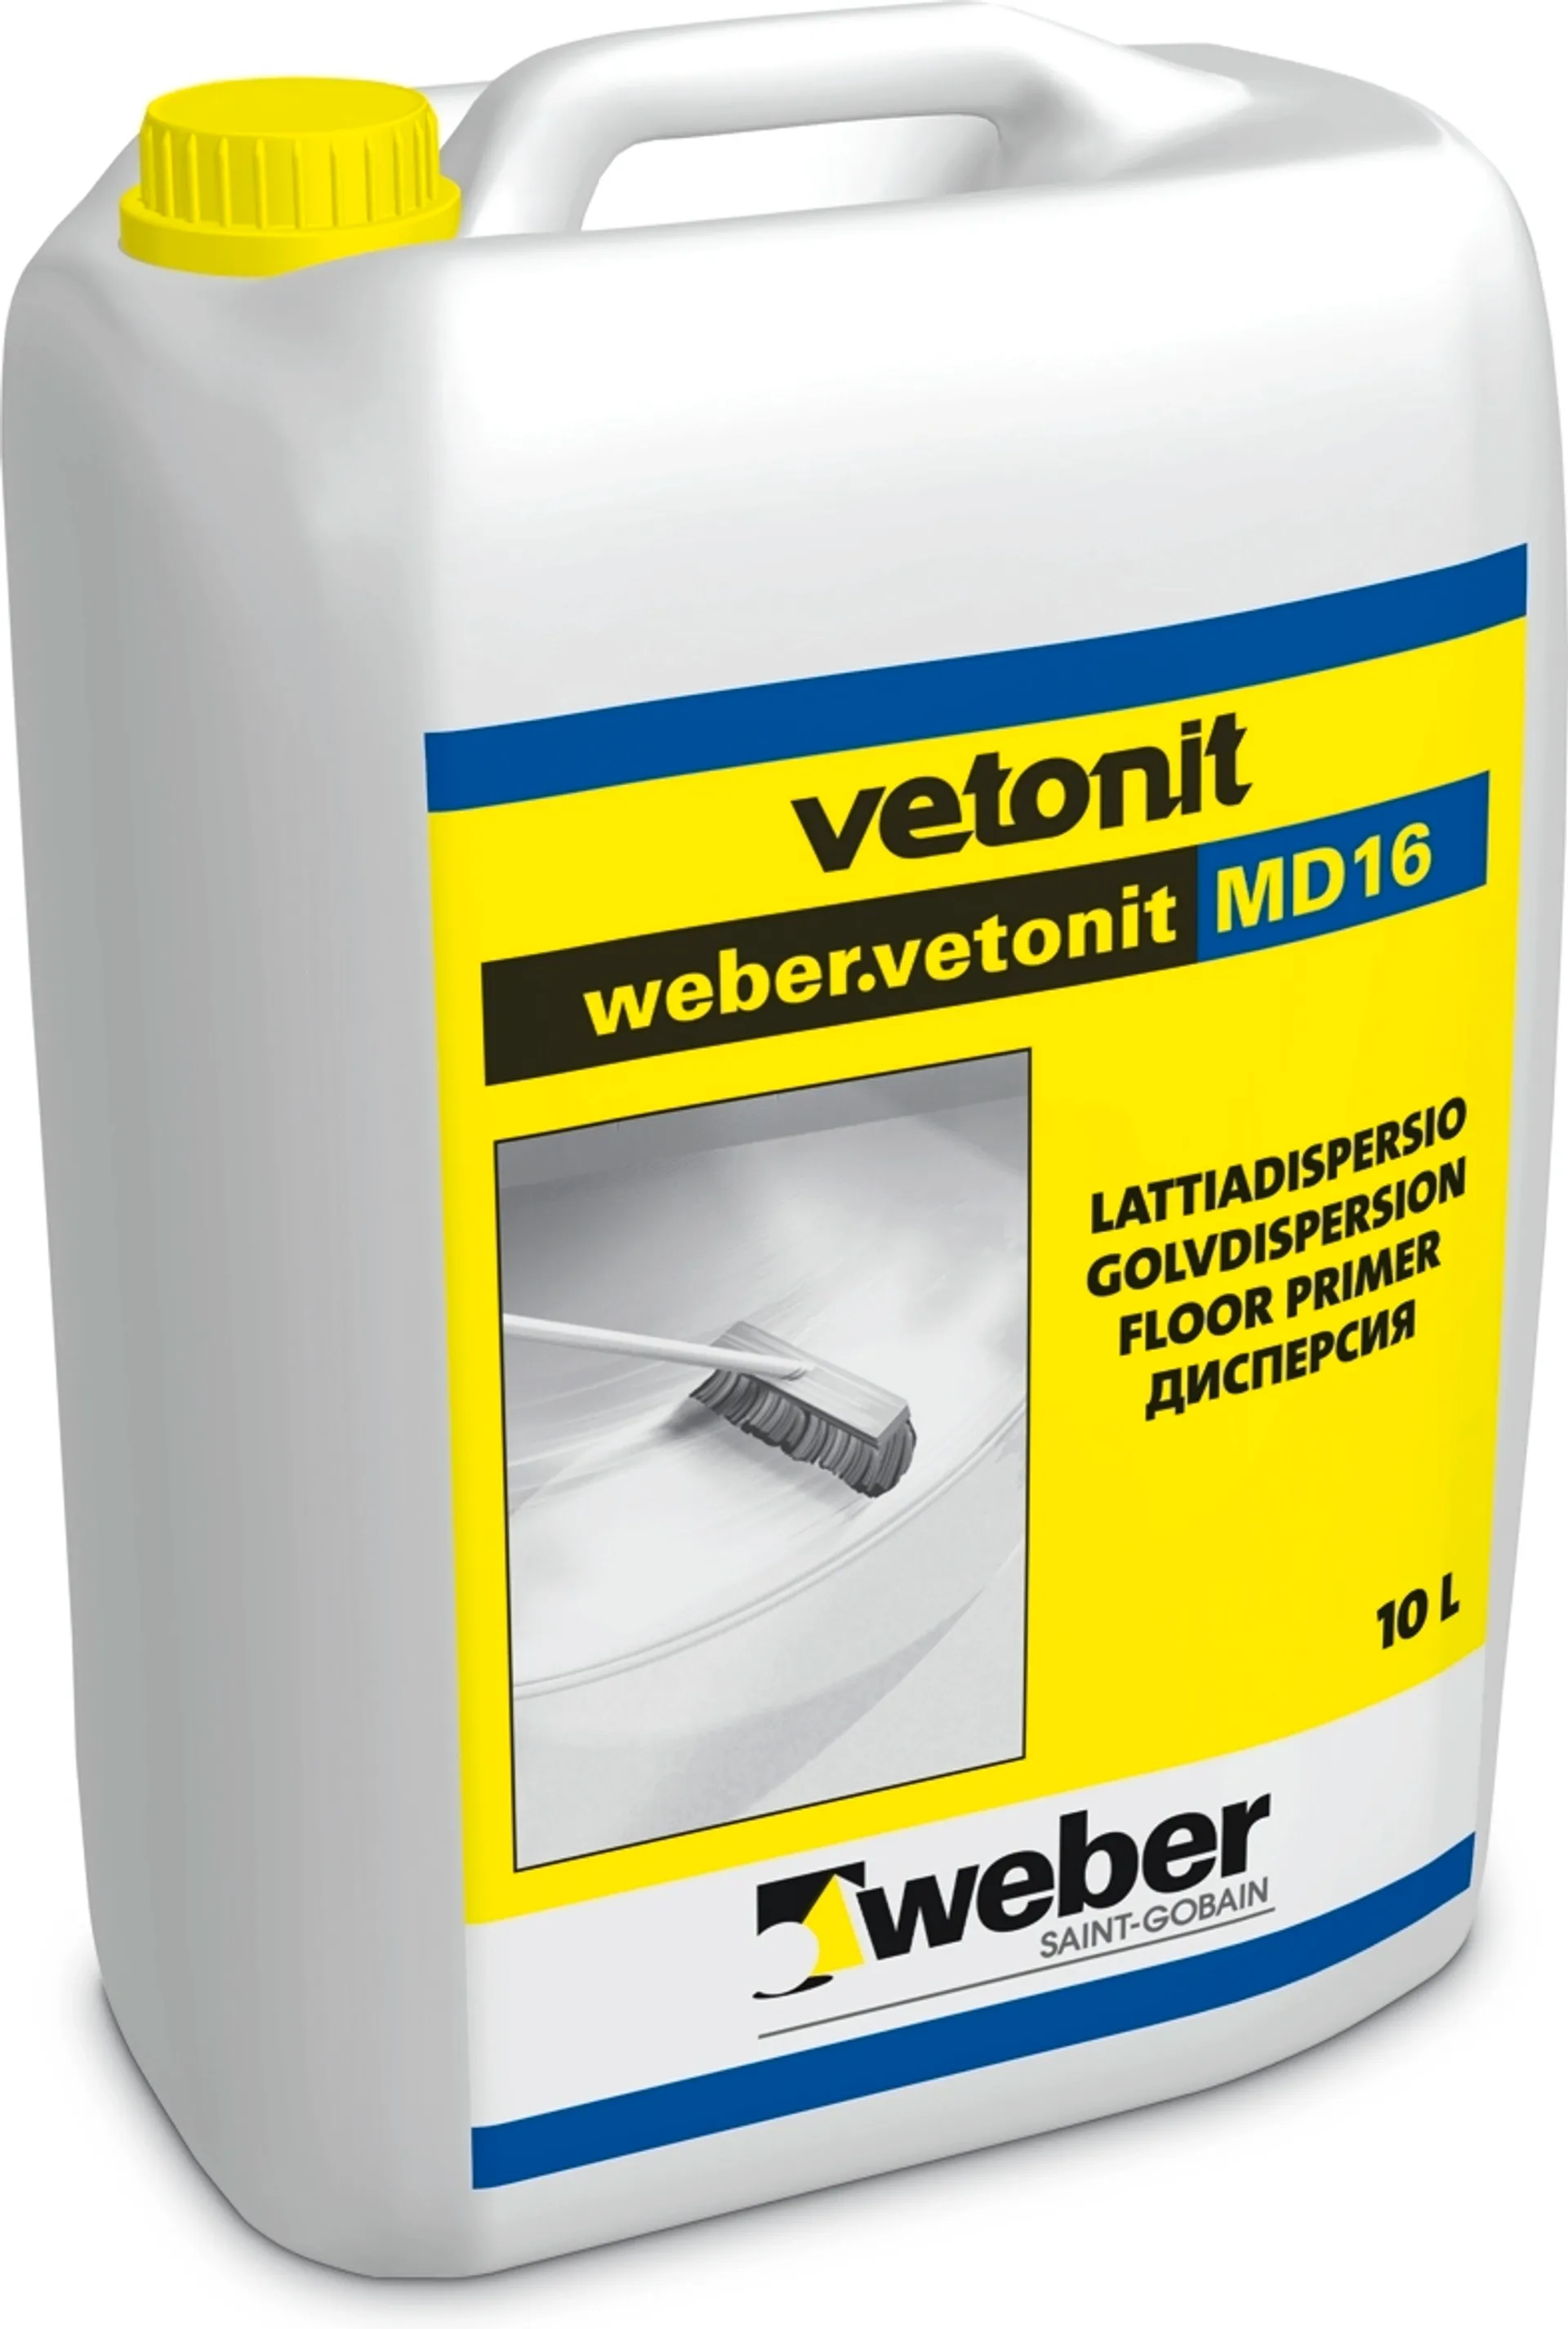 Weber Vetonit MD16 dispersio 10l